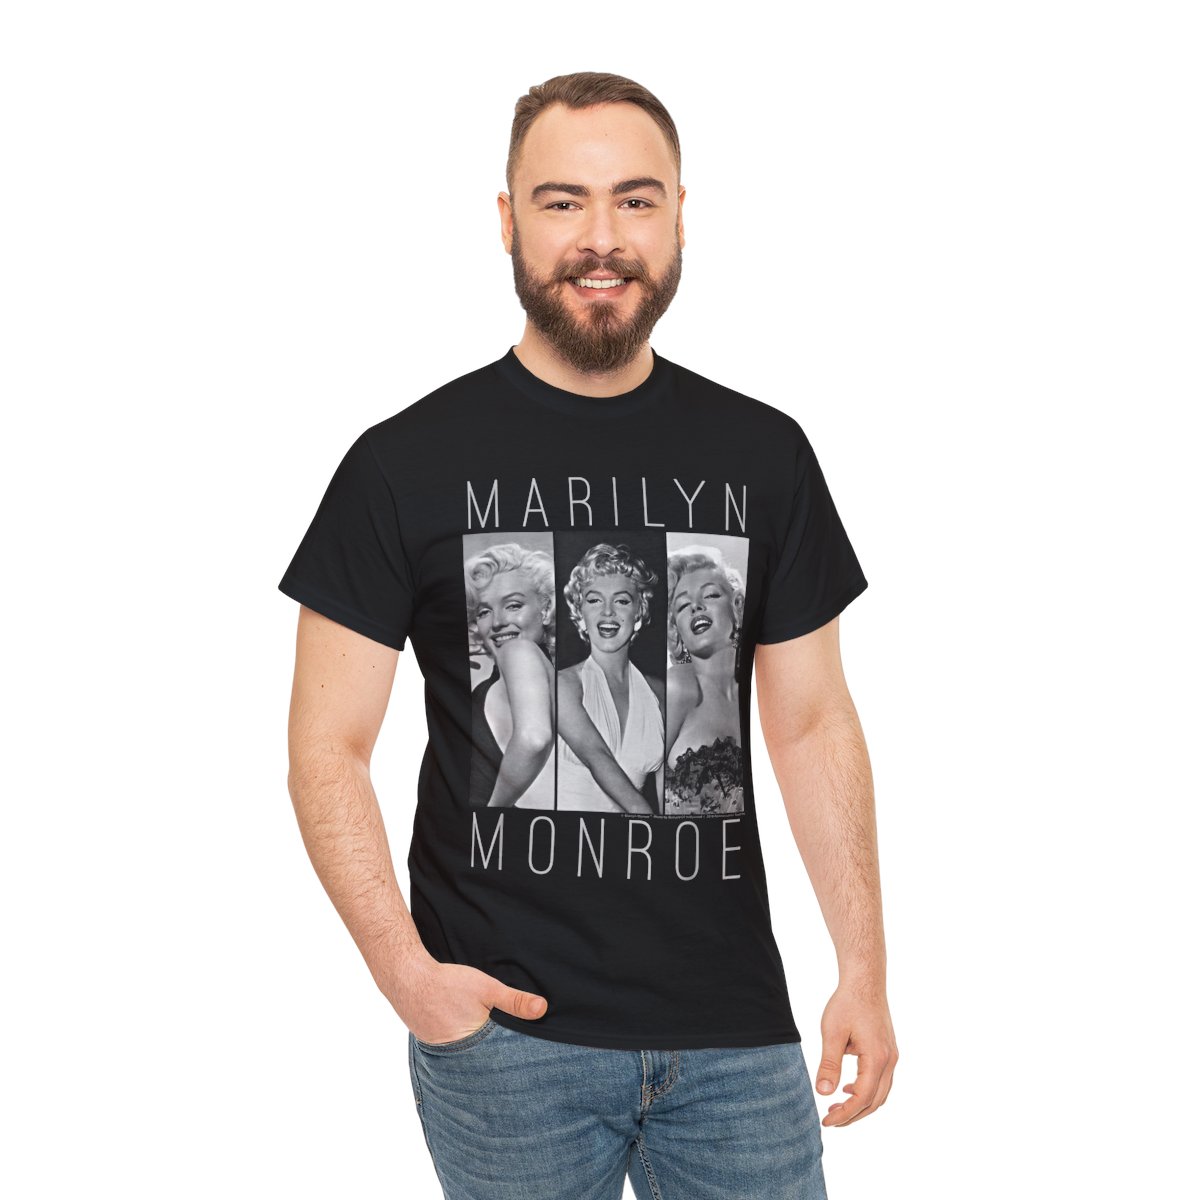 Marilyn Monroe set of 3 styles Graphic T-Shirt